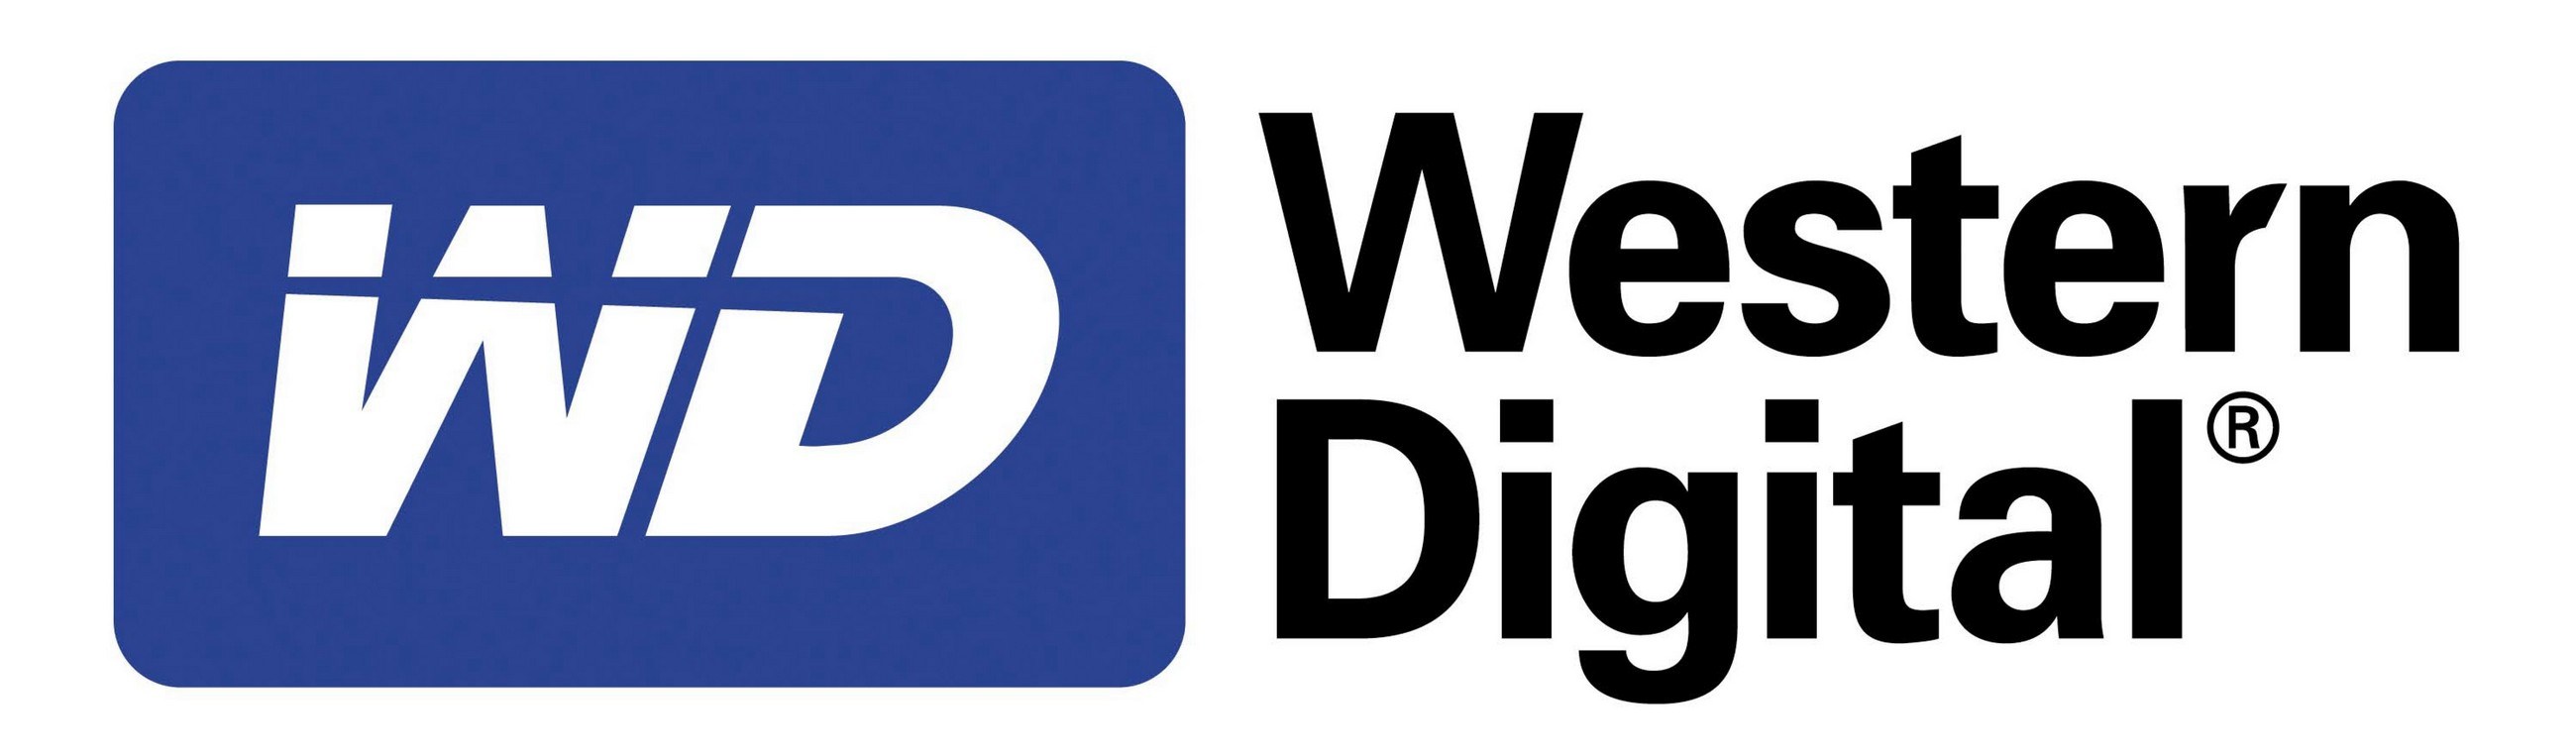 Image result for western digital logo icon